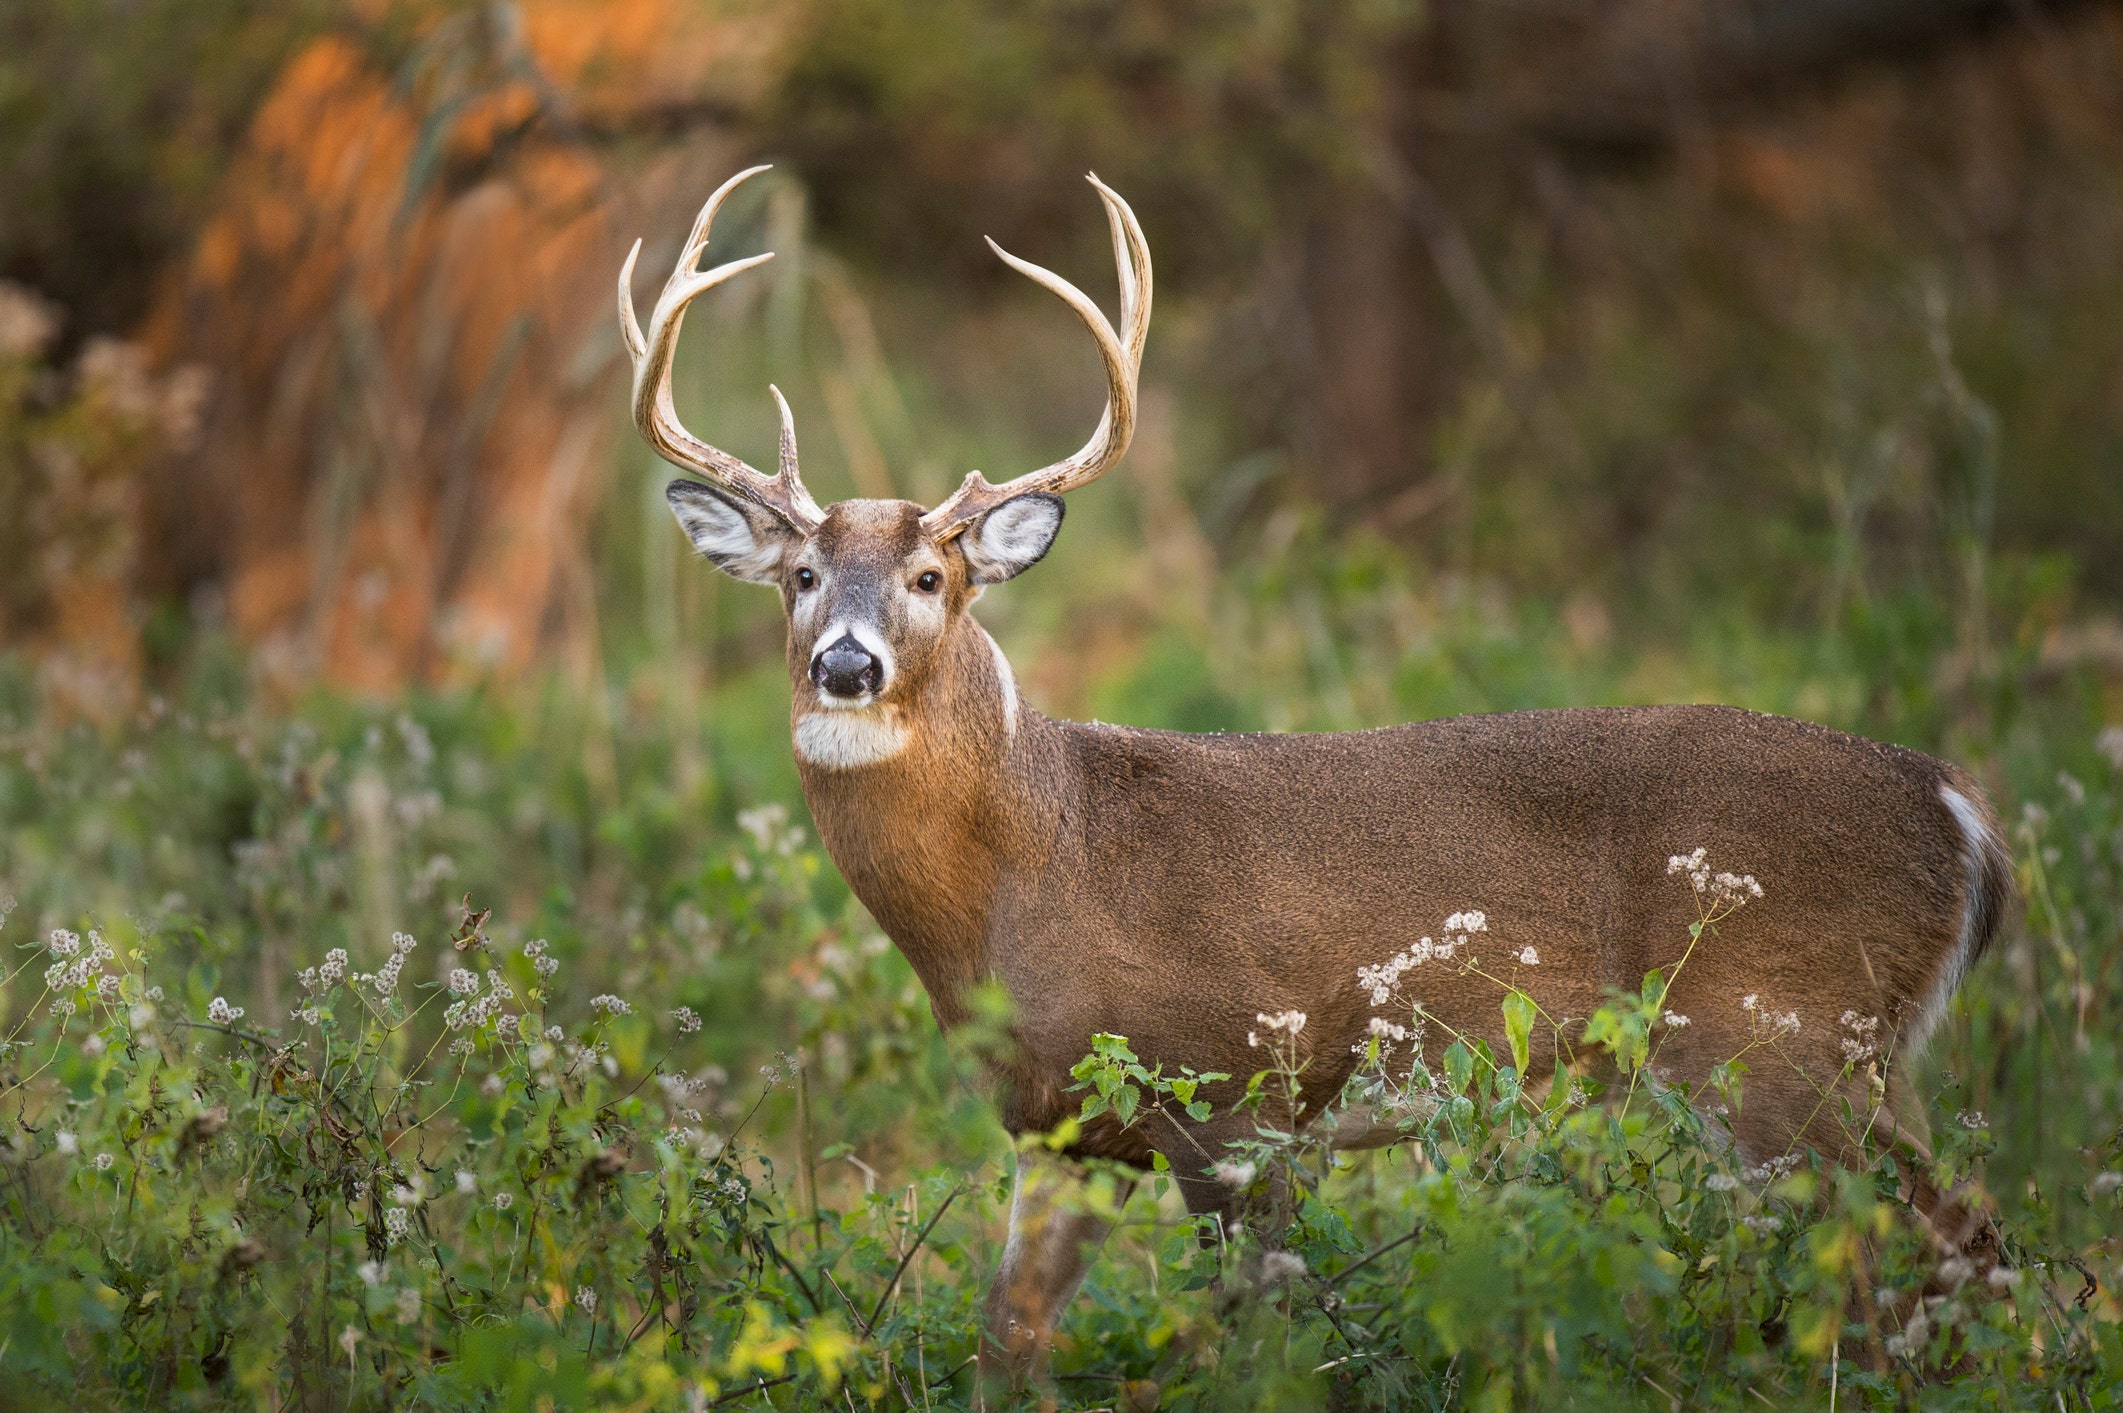 Pennsylvania approves 2-week deer hunting season, bans rifles from turkey hunts